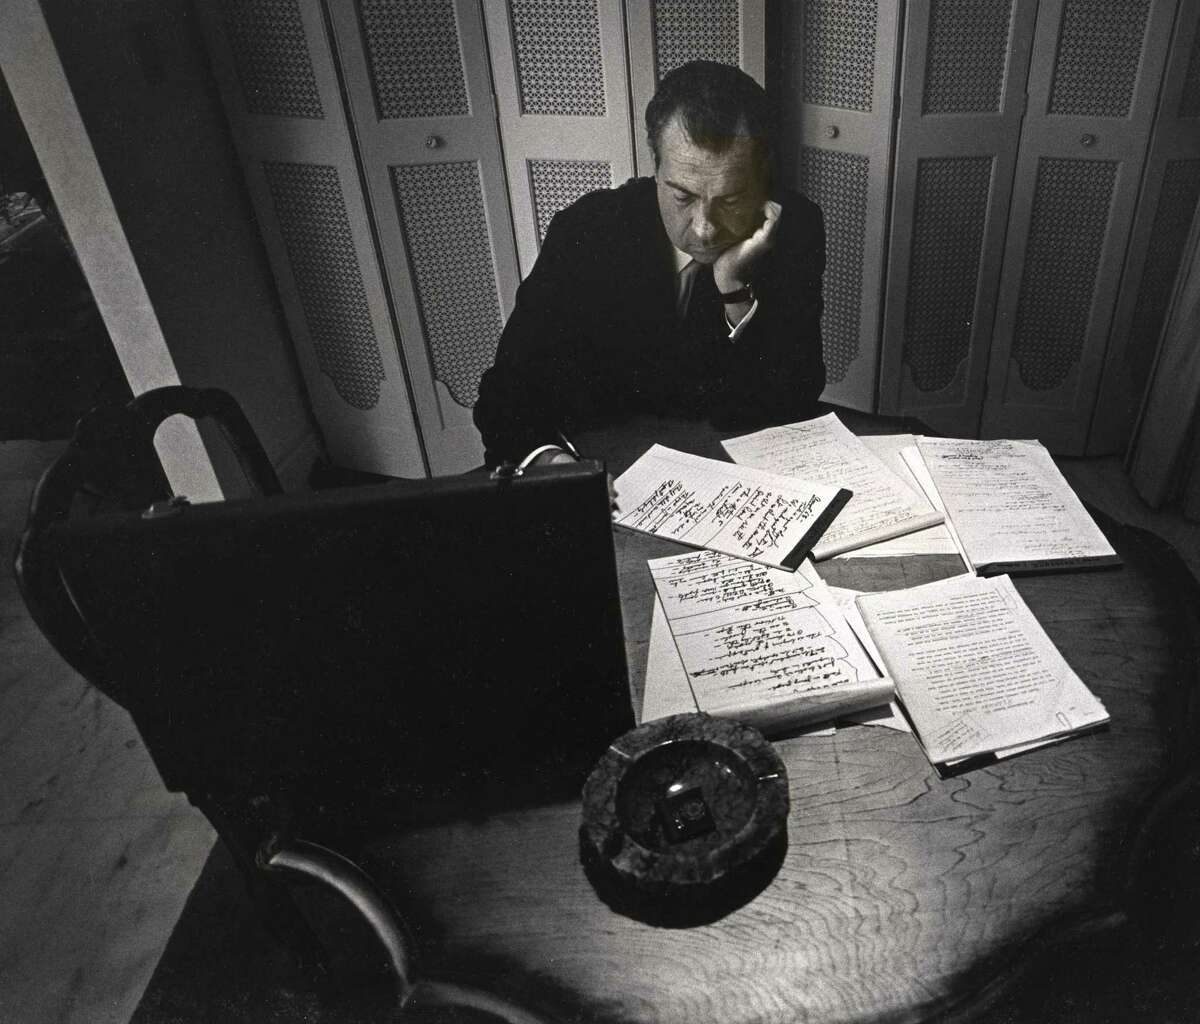 Alone in his hotel room, the presidential nominee Richard Nixon writes his acceptance speech, Republican National Convention, Miami Beach, 1968. David Douglas Duncan (American, b. 1916). Gelatin silver print, 8 13/16 x 13 7/16 inches.